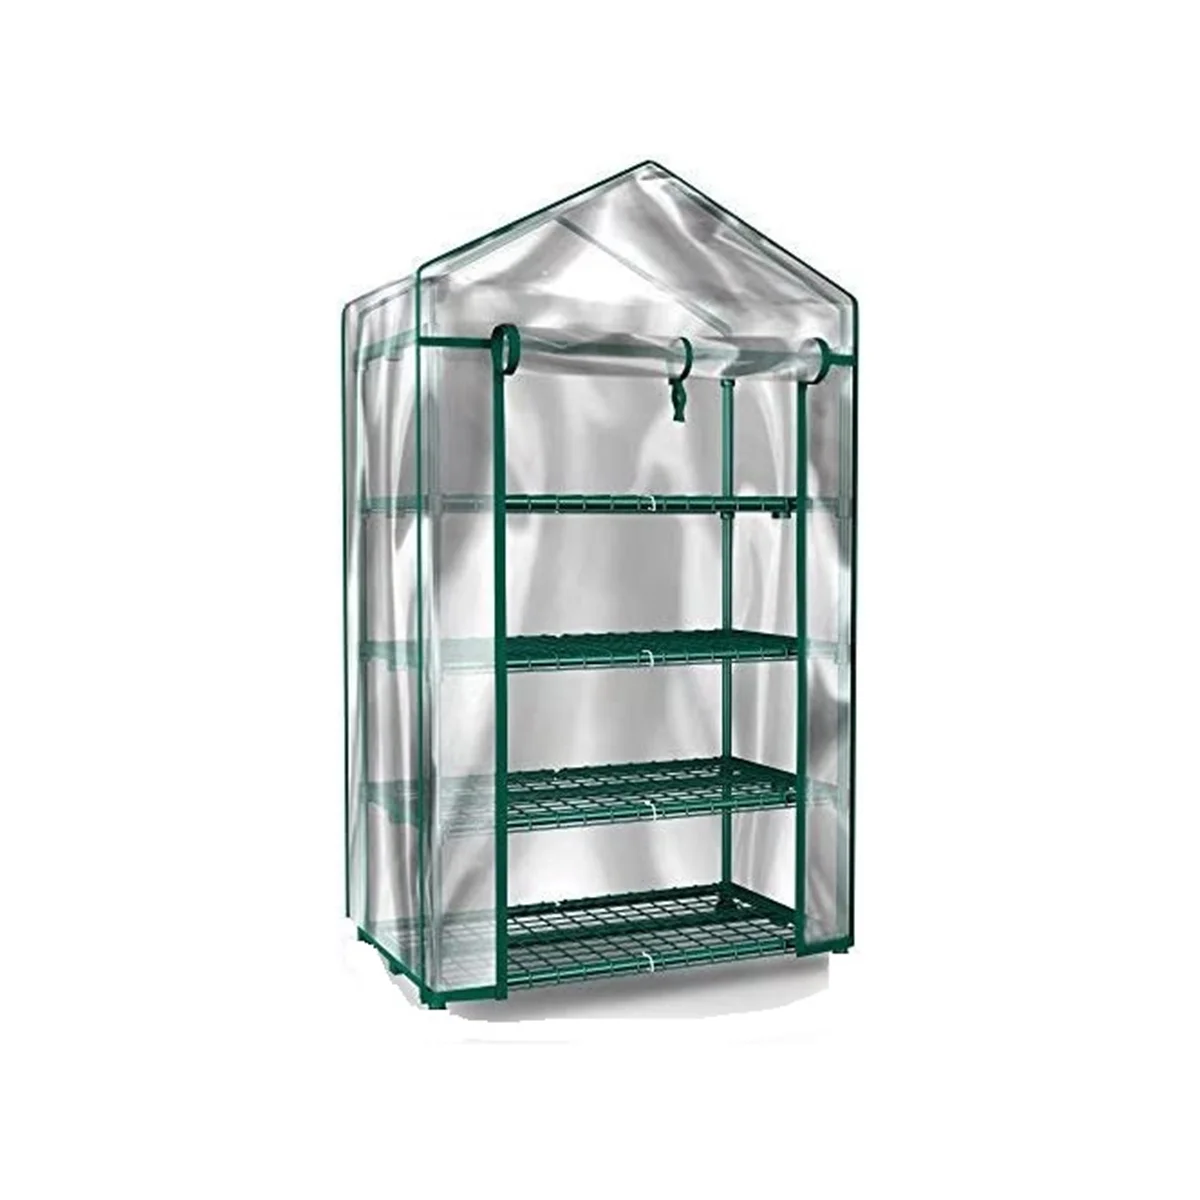 Mini Greenhouse-4-Tier Indoor Outdoor Sturdy Portable Shelves-Grow Plants, Seedlings,